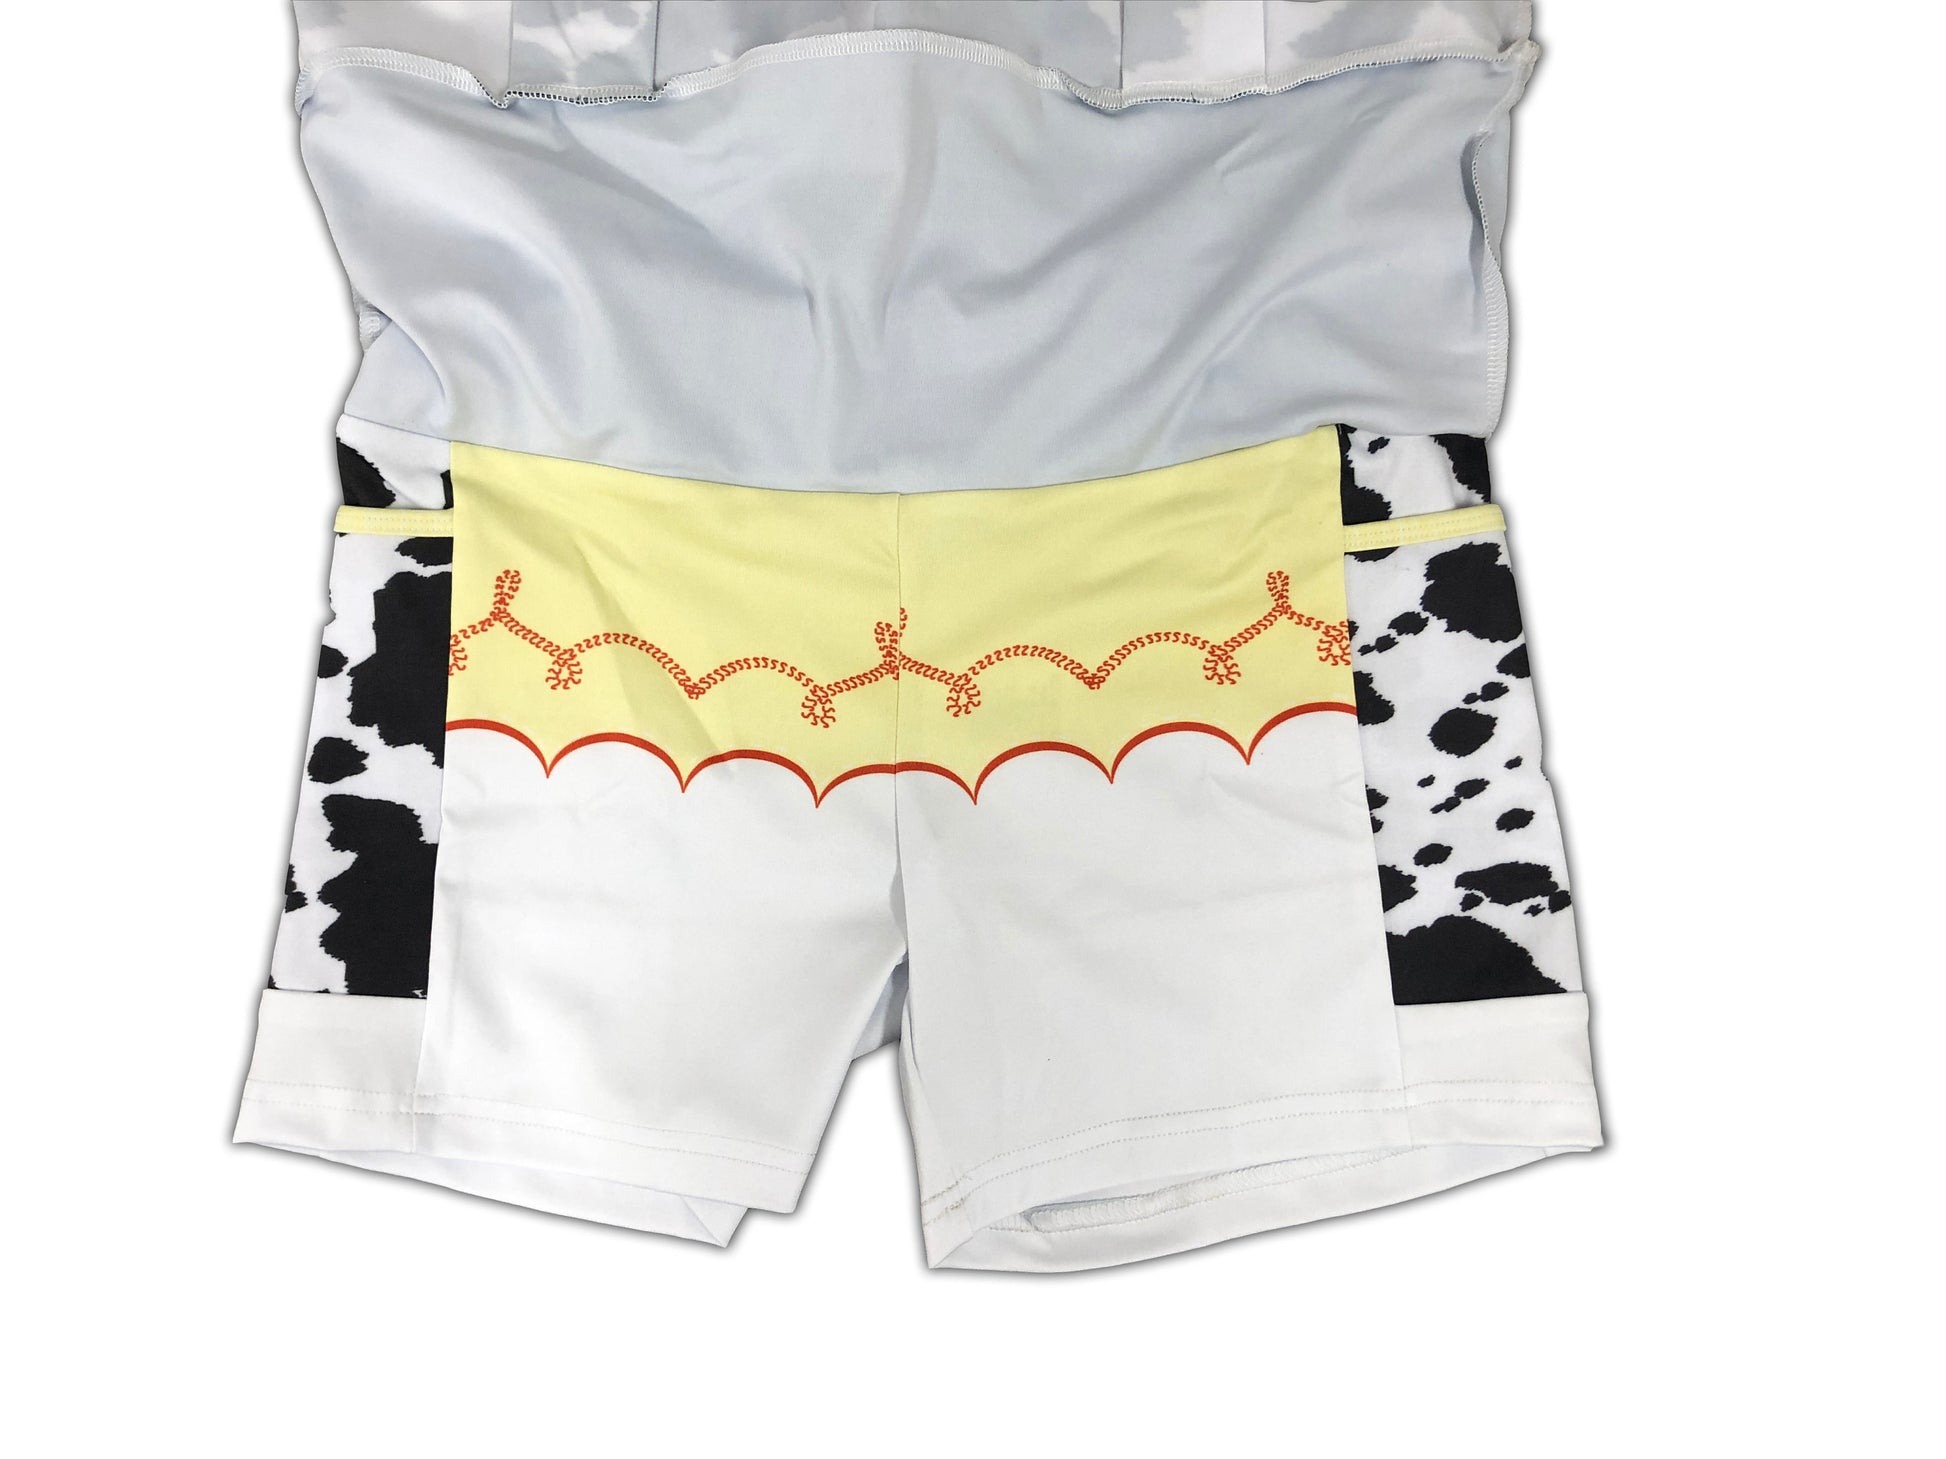 Jessie Toy Story Inspired Sport Skirt